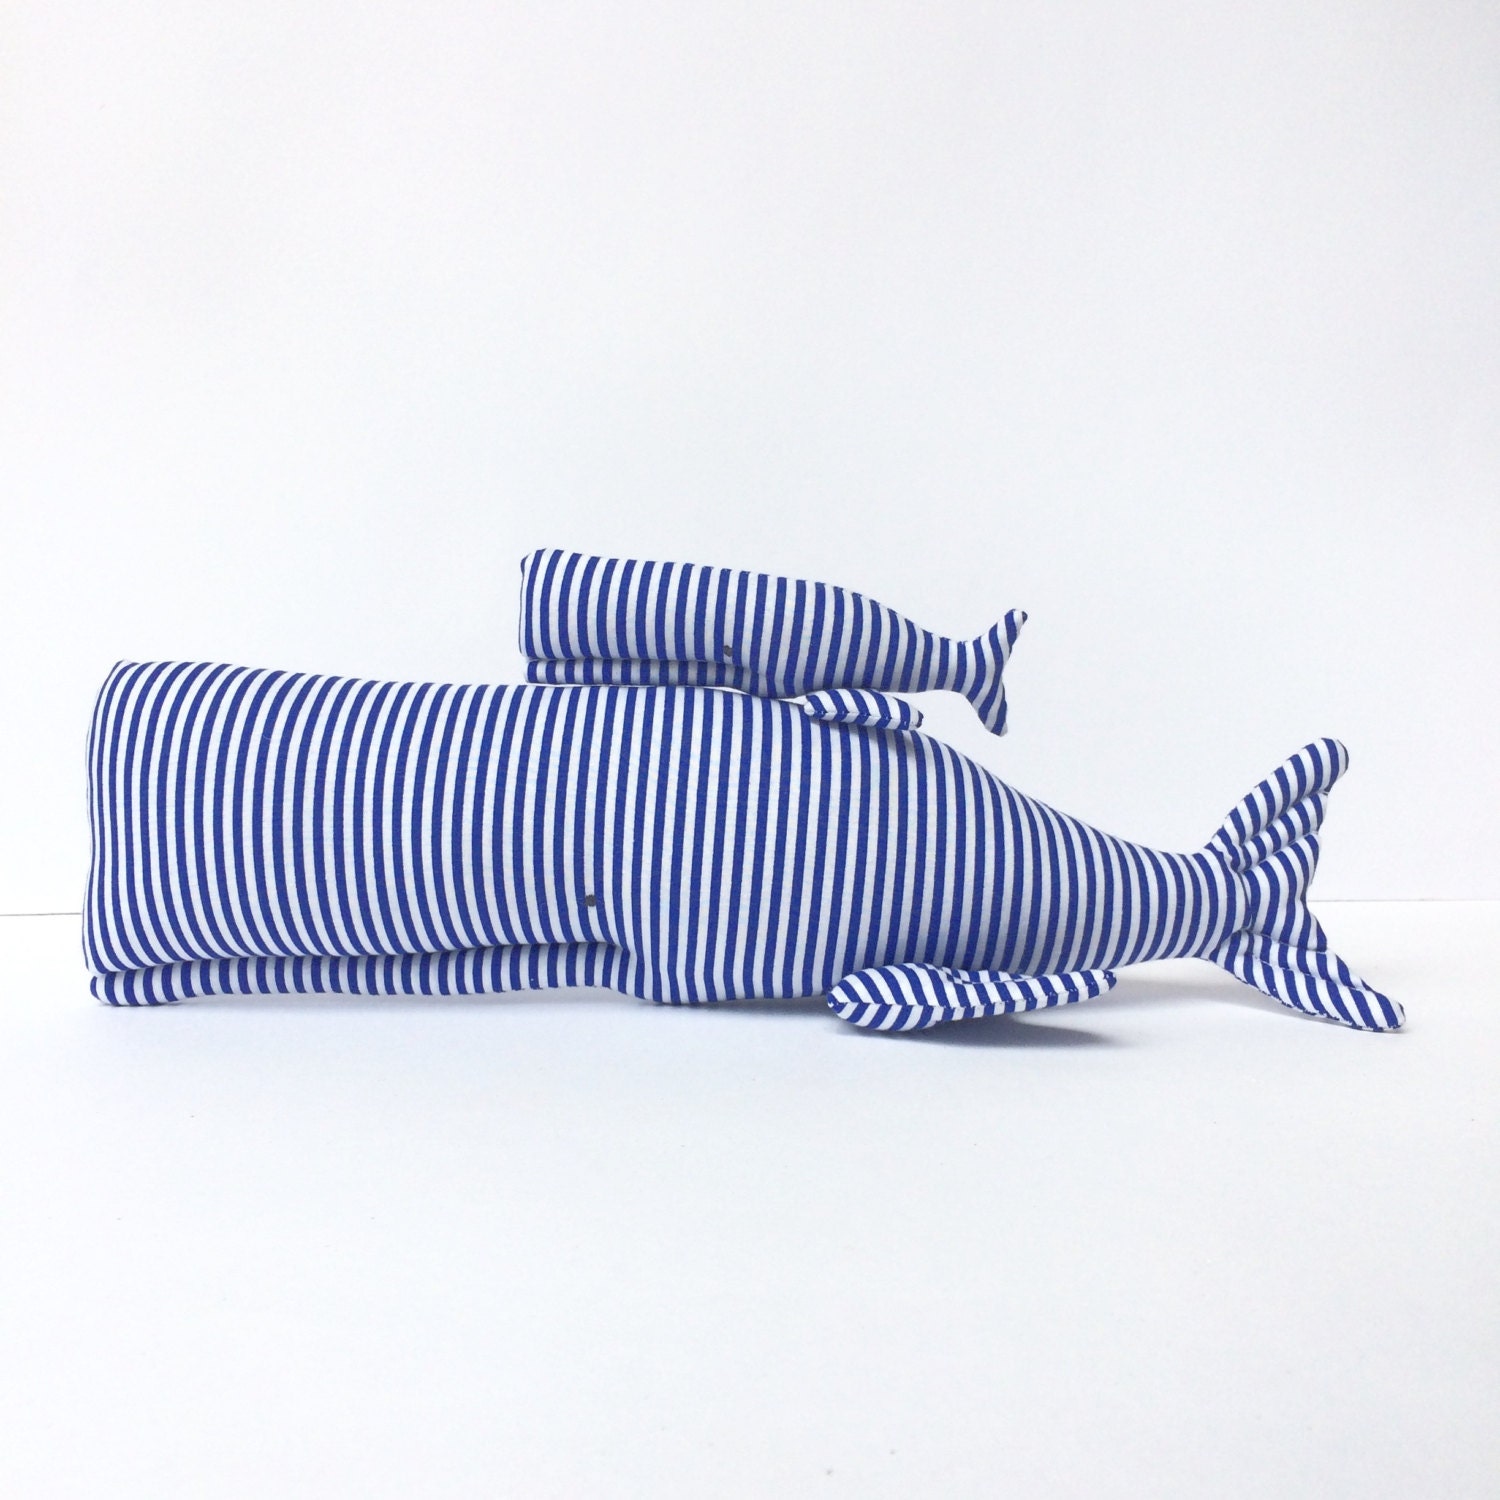 Whales toys Plush Whales animal toys.Cute softie textile